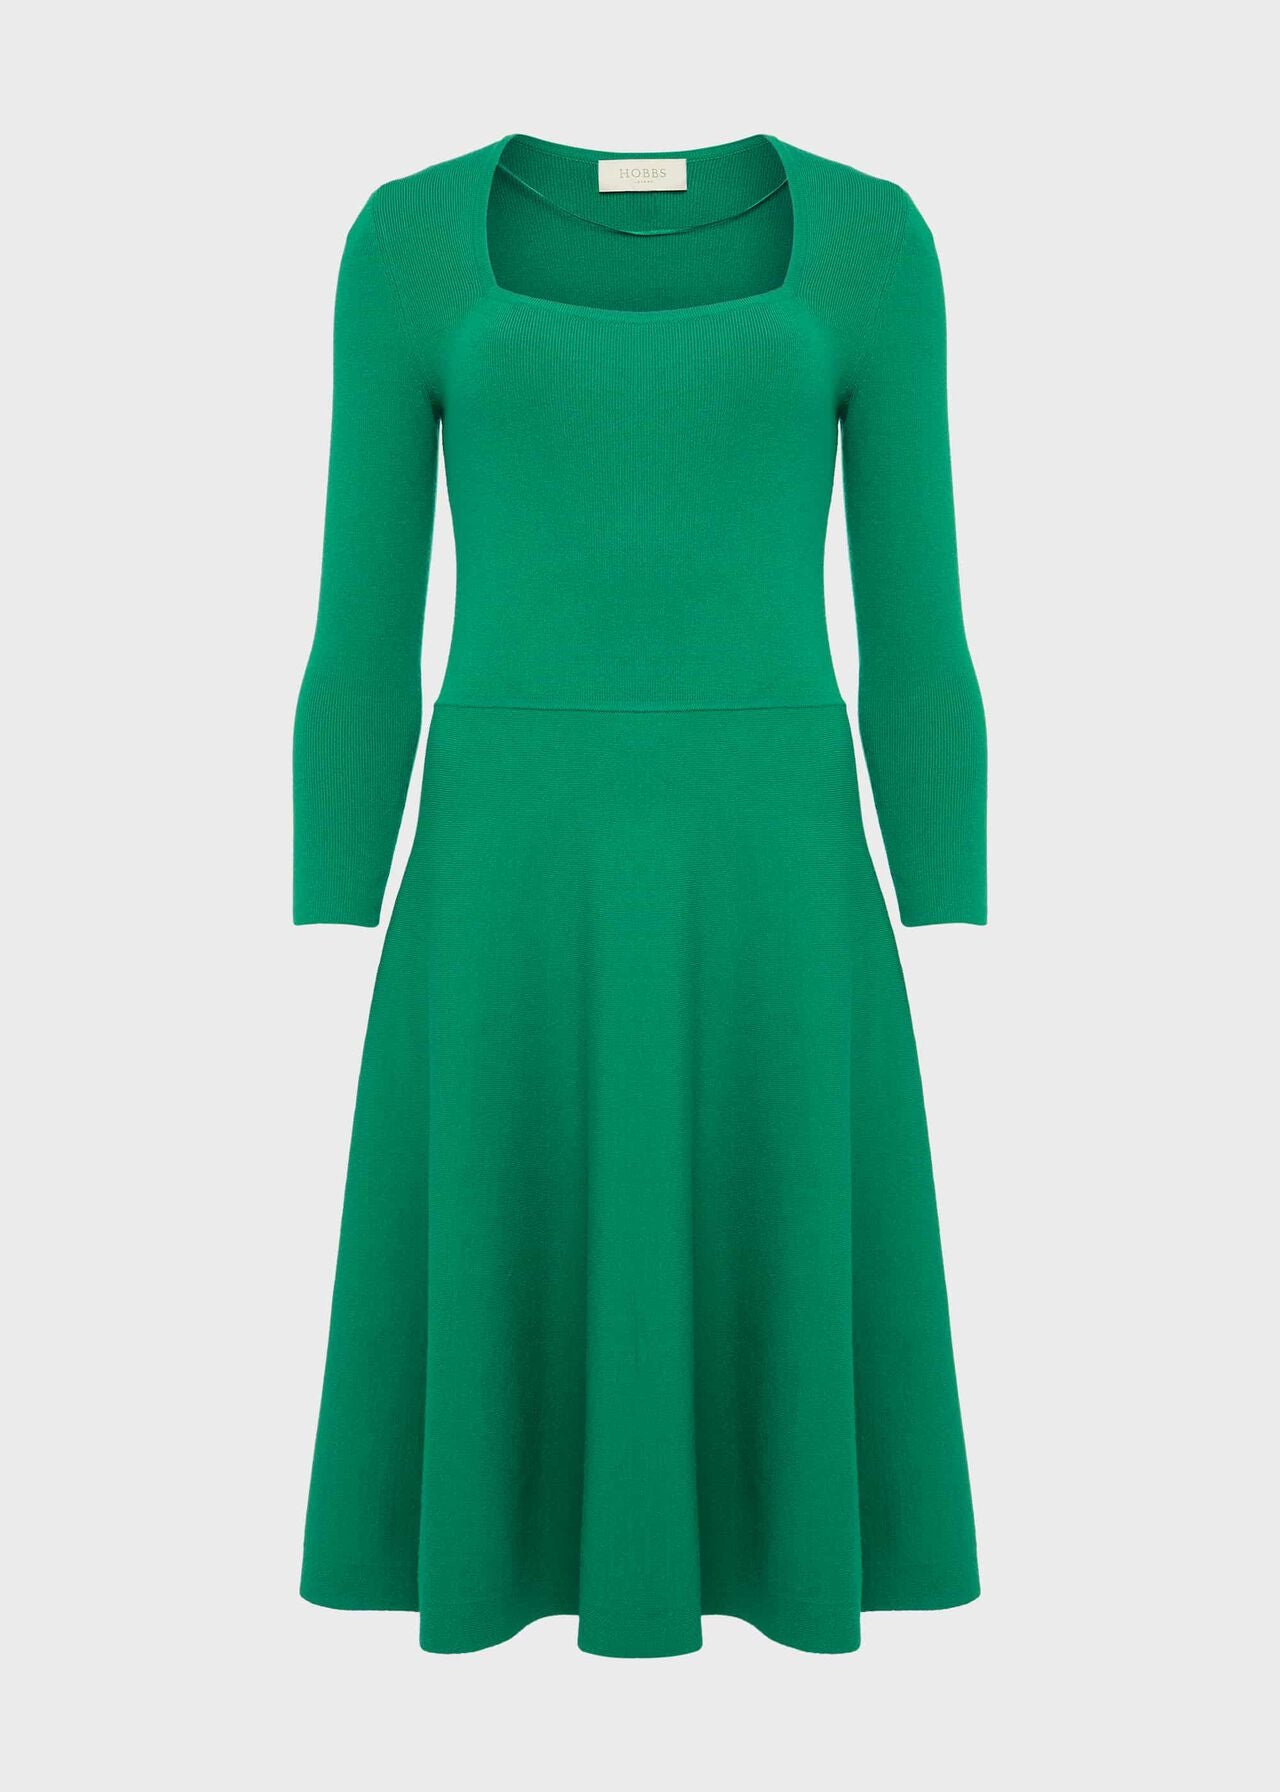 Cassie Knitted Dress 0121/9717/1185l00 Apple-Green